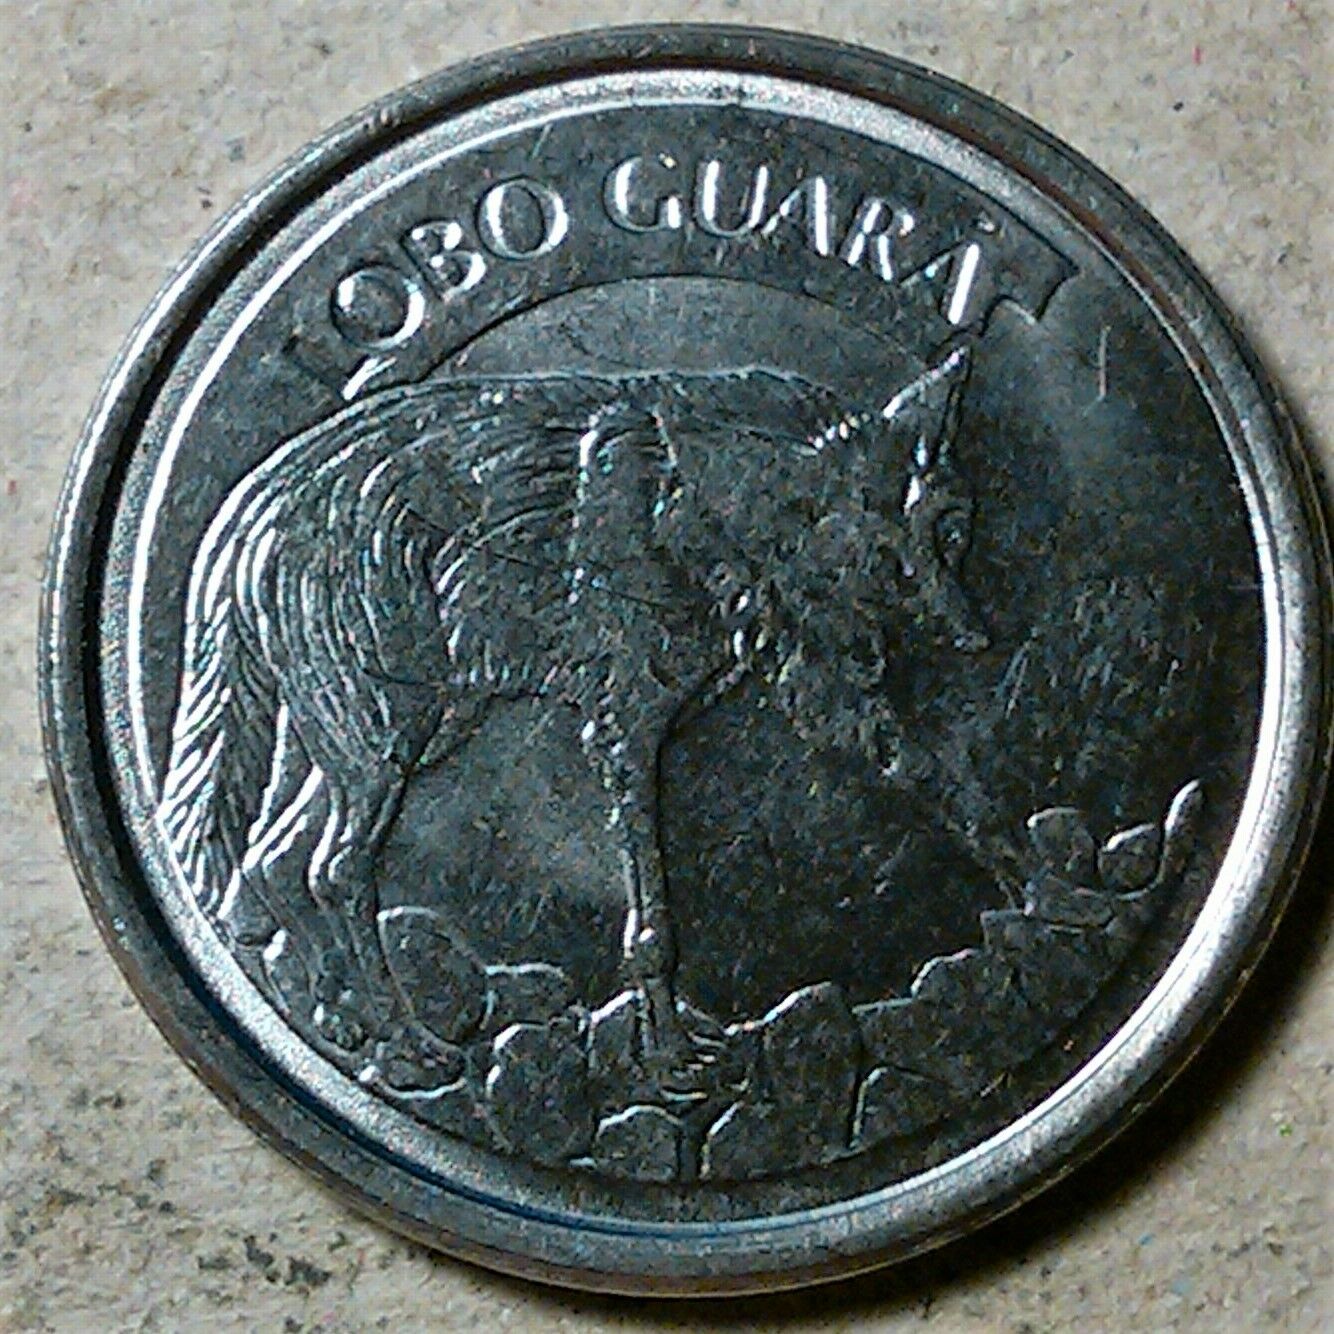 Brazil 100 cruzeiros reais reales 1993 Maned Wolf Lobo Guara km630